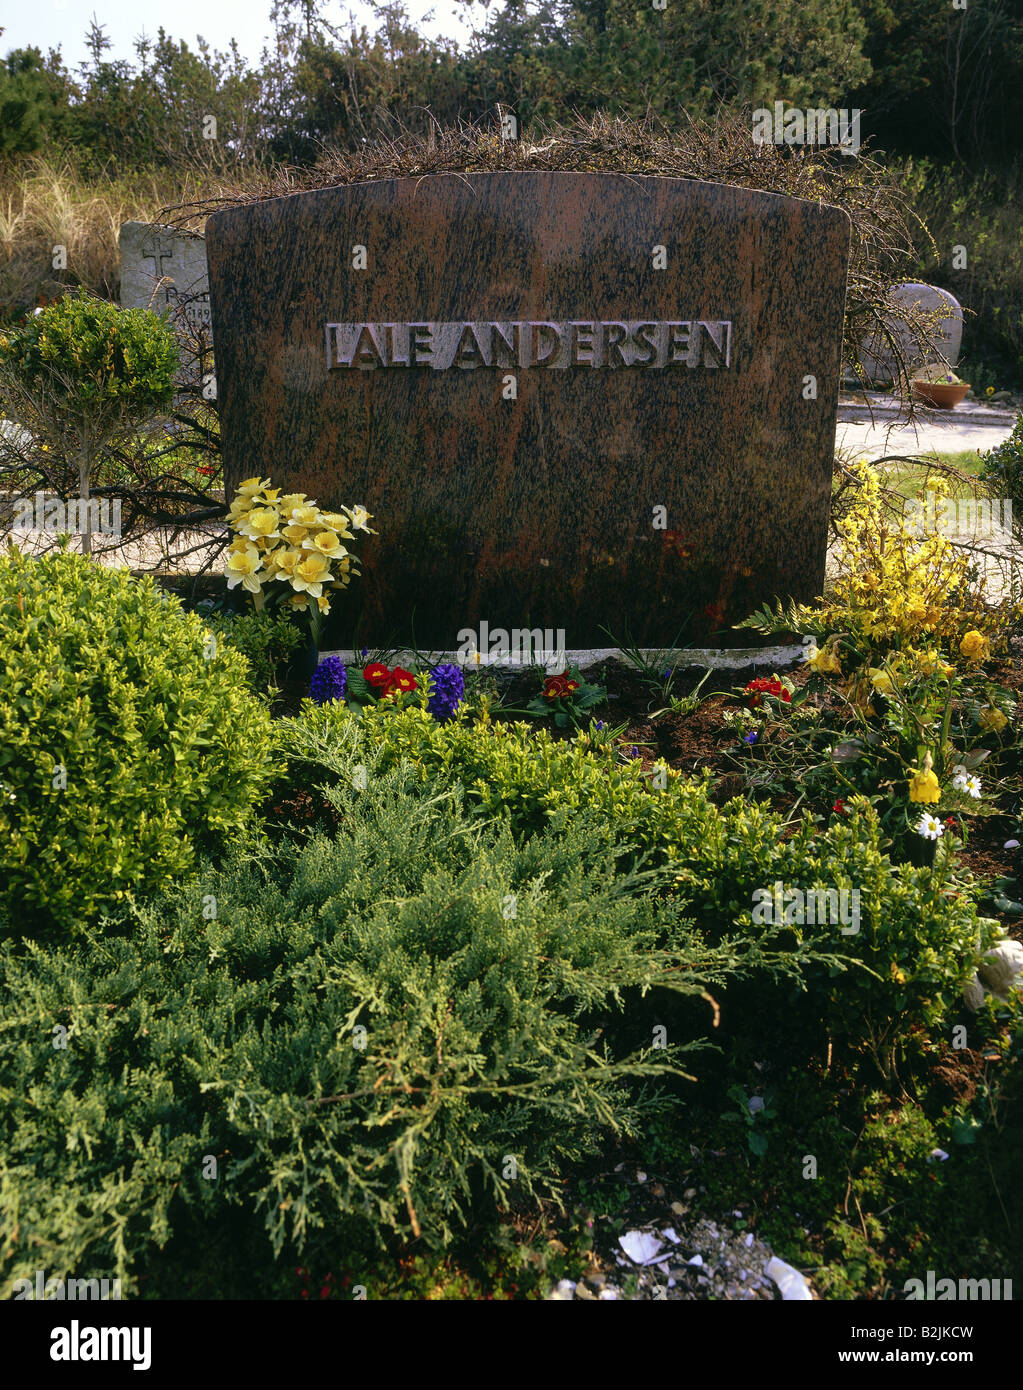 Andersen, Lale, 23.3.1905 - 29 8.1972, German singer and actress, grave, Dünenfriedhof, Langeoog, Lower Saxony, Germany, Stock Photo